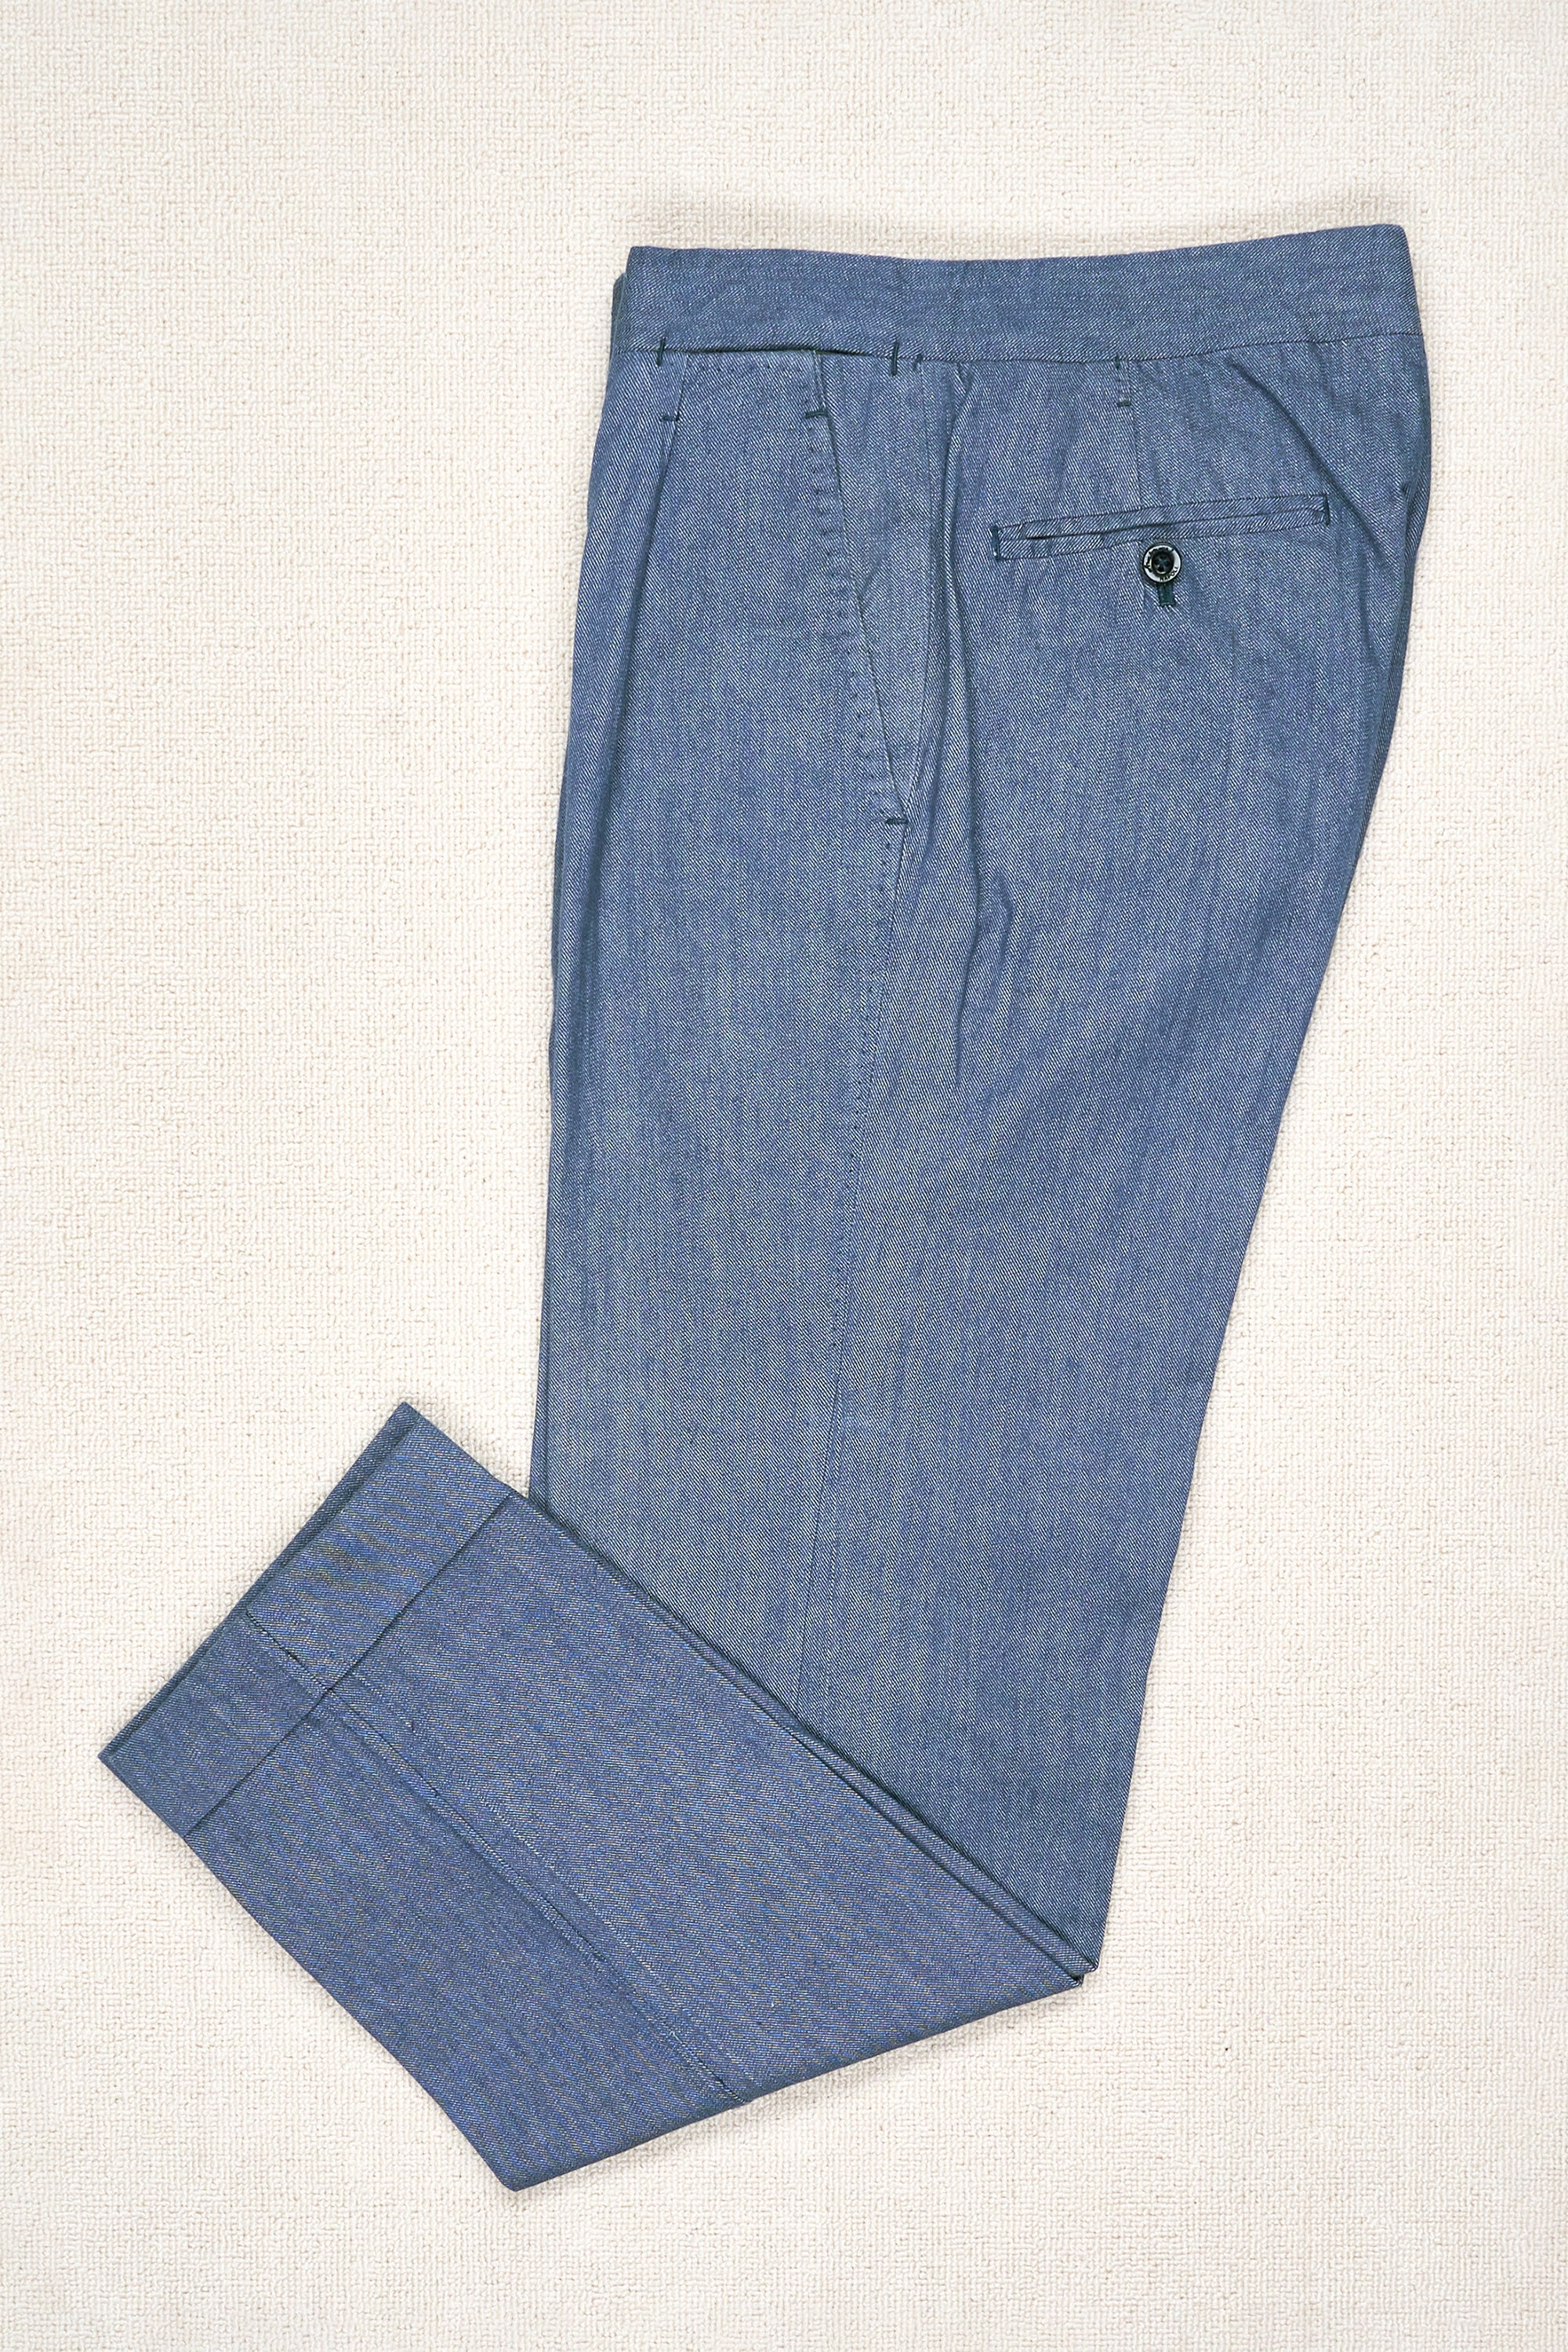 Ambrosi Napoli Blue Denim Cotton Single Pleat Trousers Bespoke